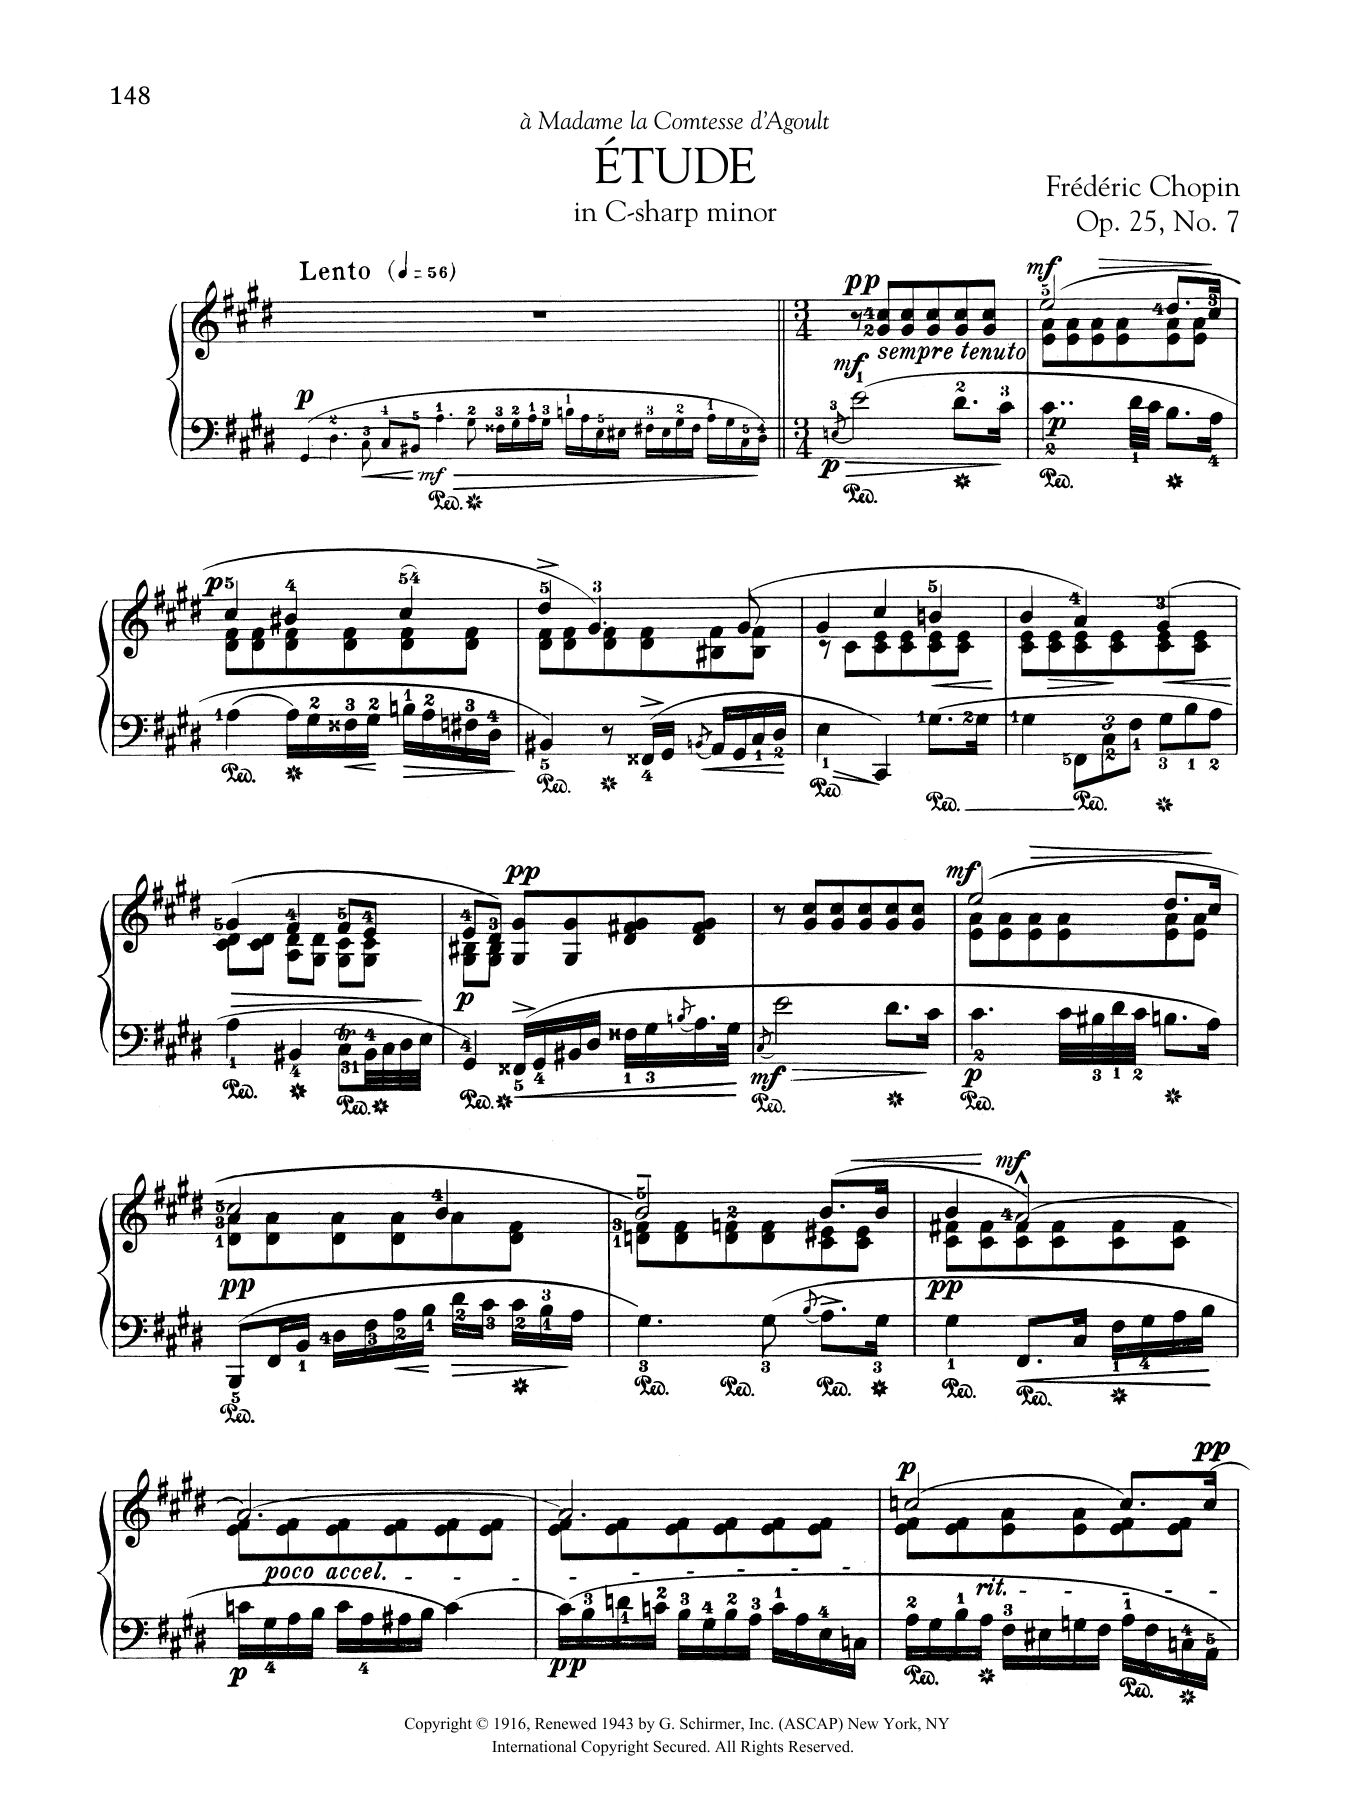 Download Frederic Chopin Etude in C-sharp minor, Op. 25, No. 7 Sheet Music